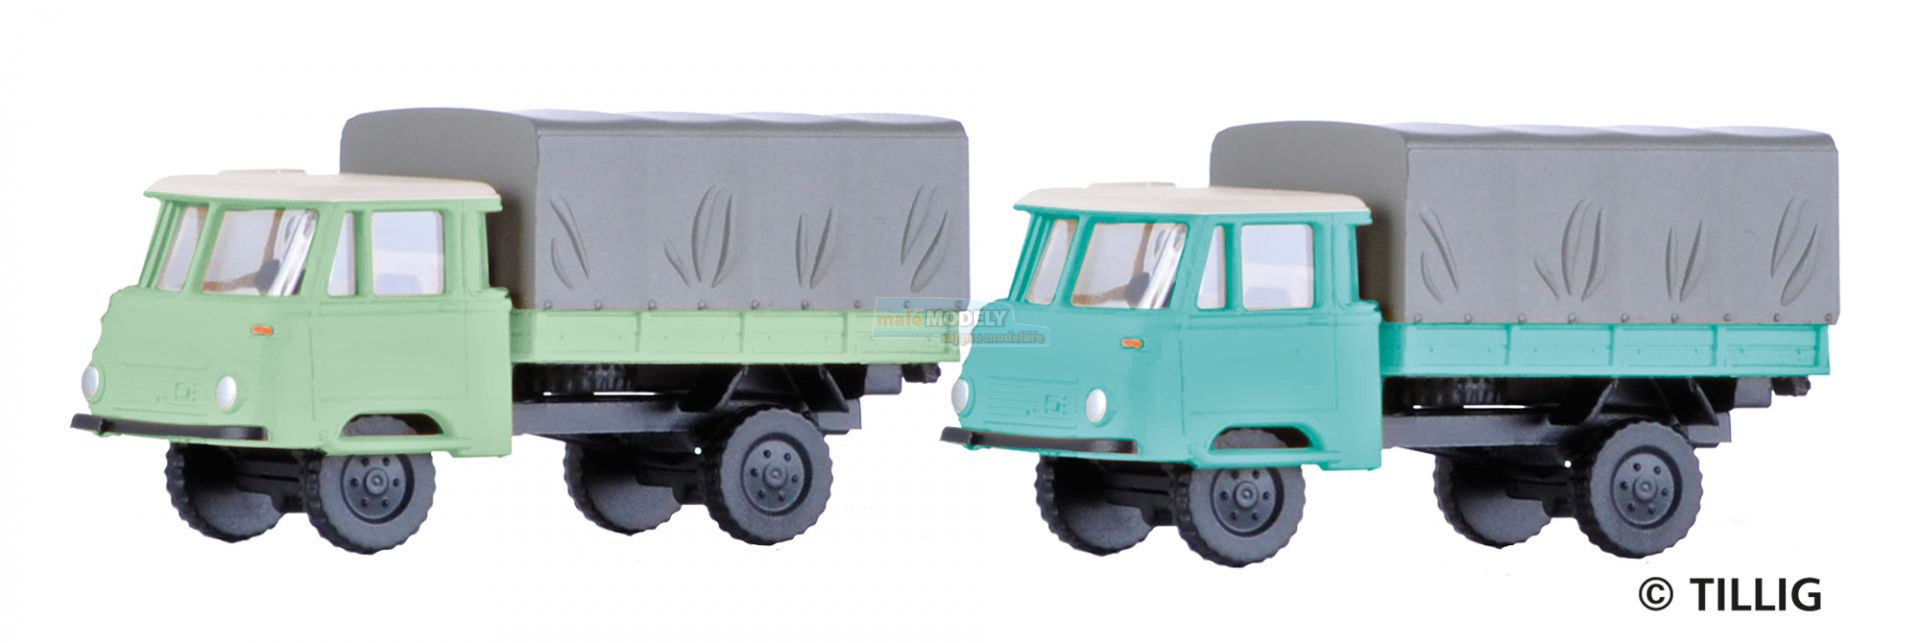 Set dvou nákladních vozů LKW Robur LO 1801